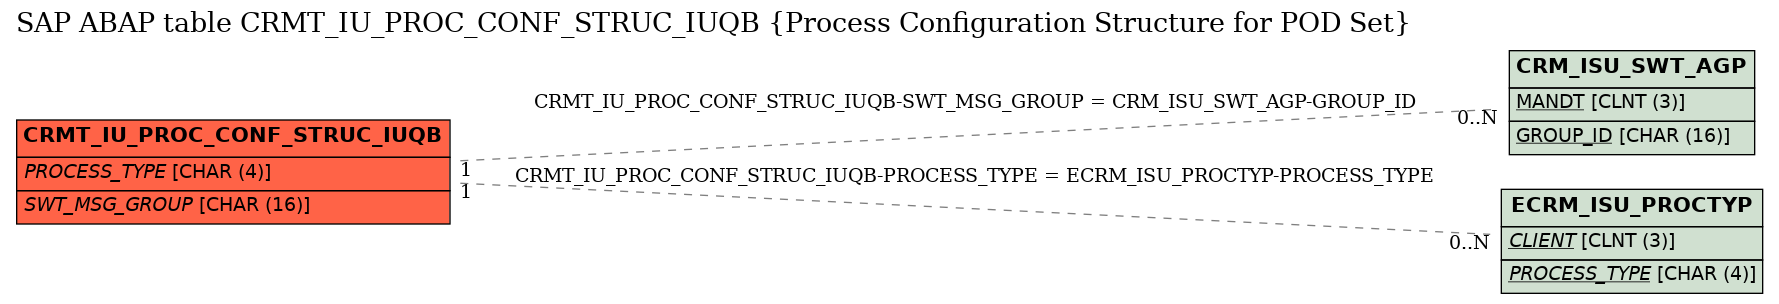 E-R Diagram for table CRMT_IU_PROC_CONF_STRUC_IUQB (Process Configuration Structure for POD Set)